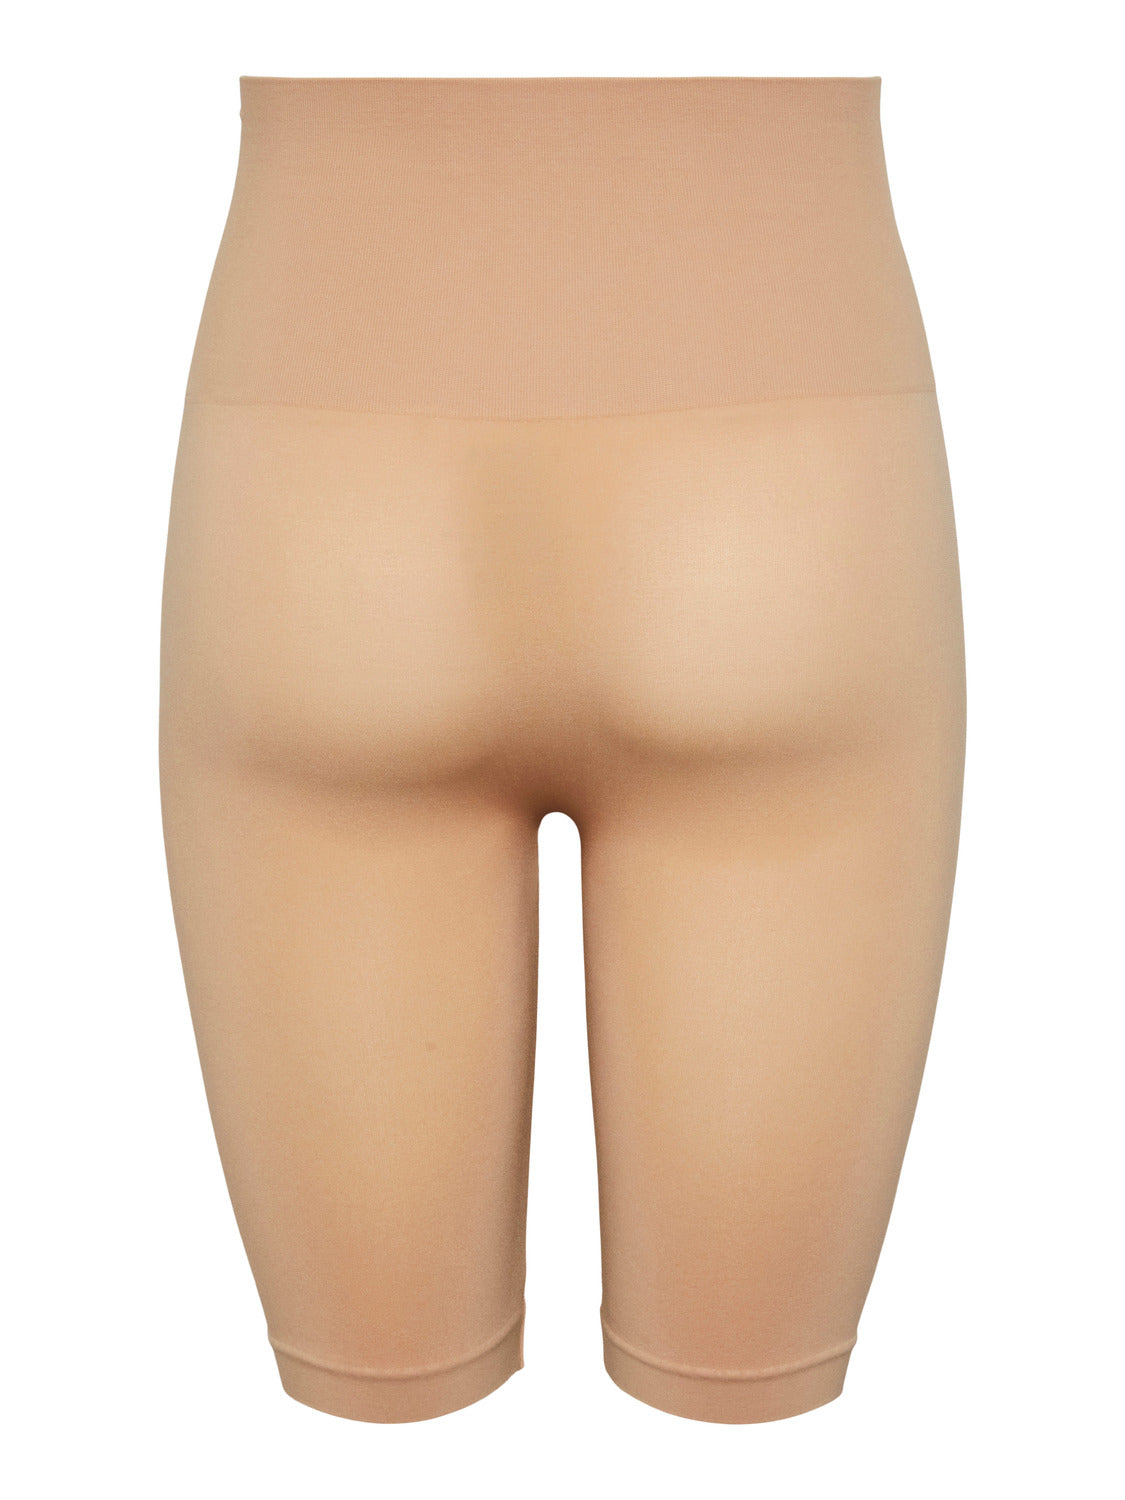 PCIMAGINE Shorts - Tan